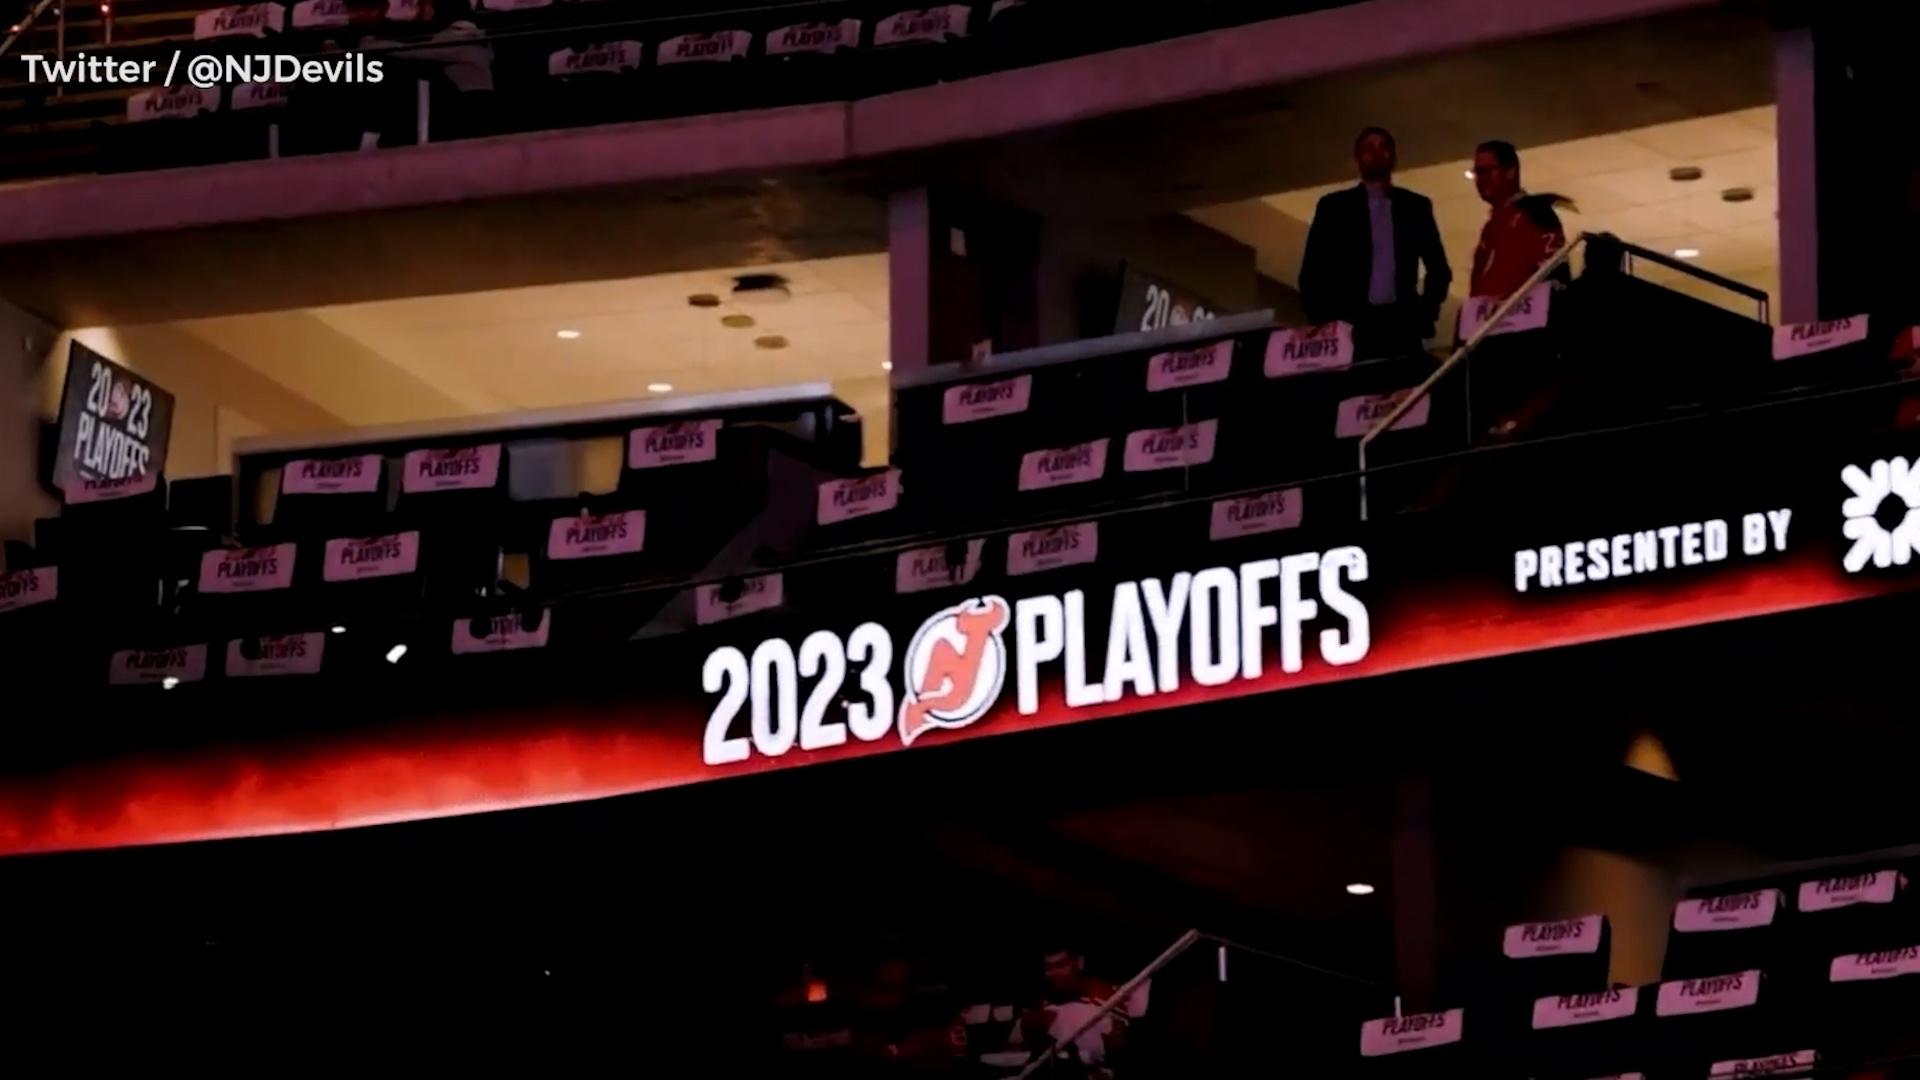 NJ Devils fan fest 2023: Outside Prudential Center before NHL playoff game